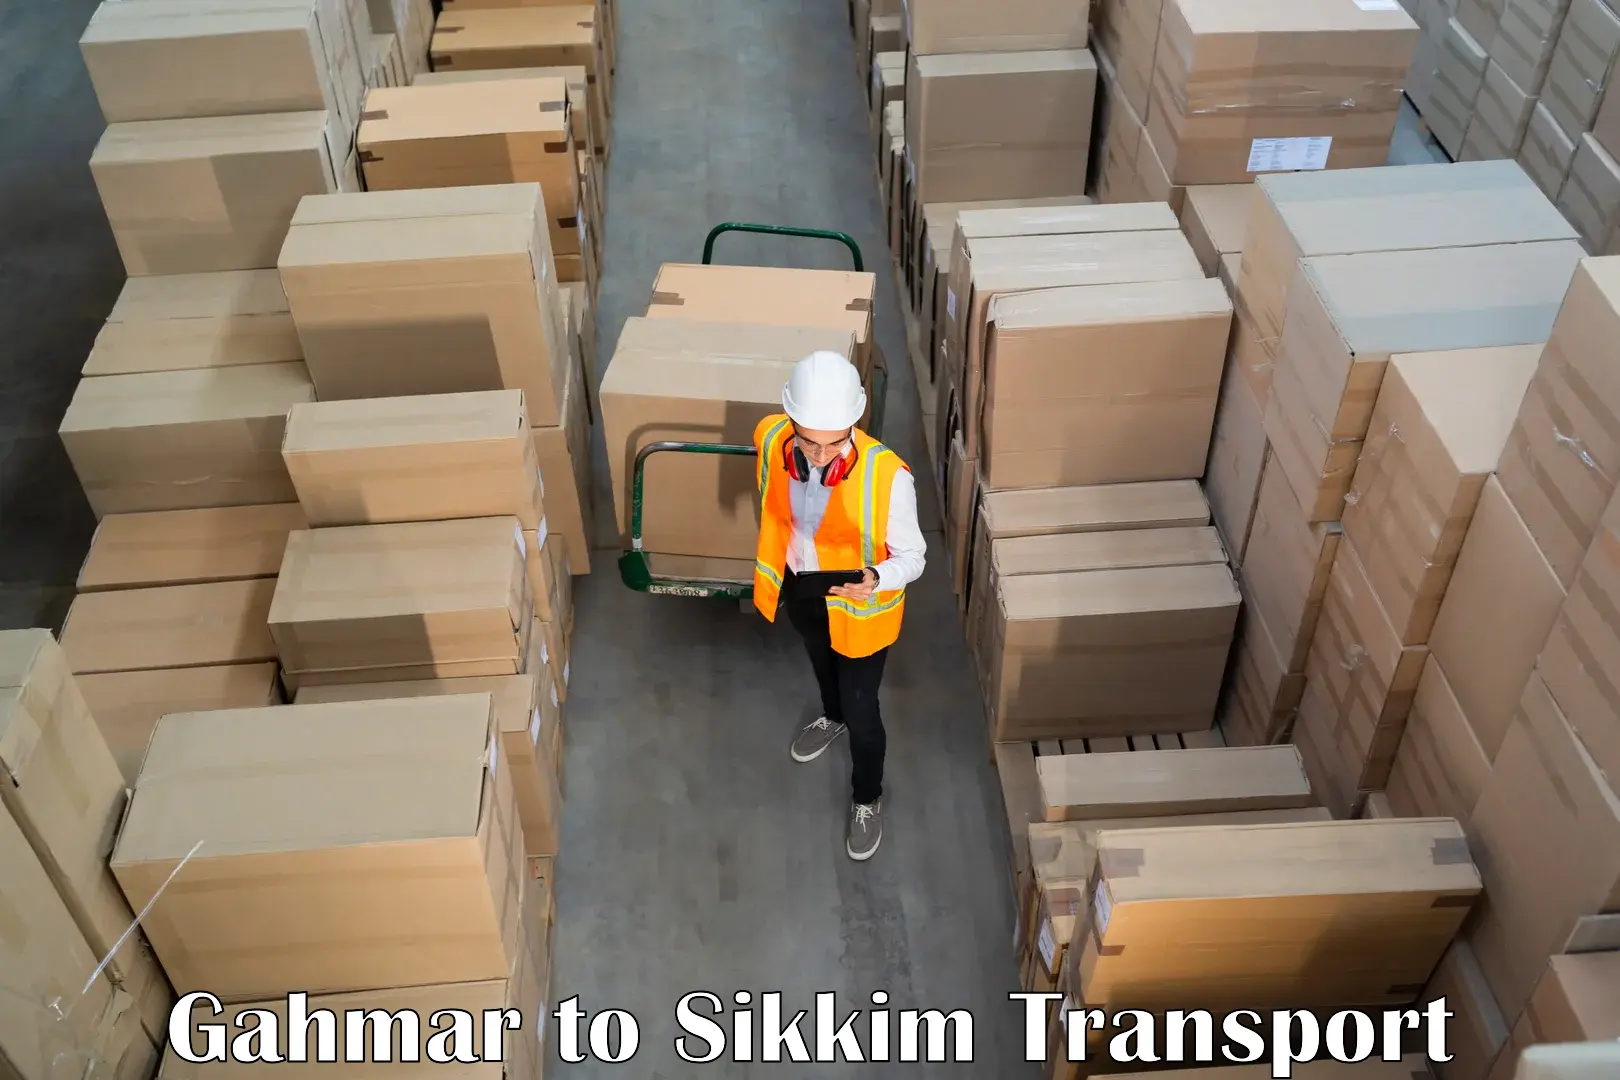 Air freight transport services Gahmar to Sikkim